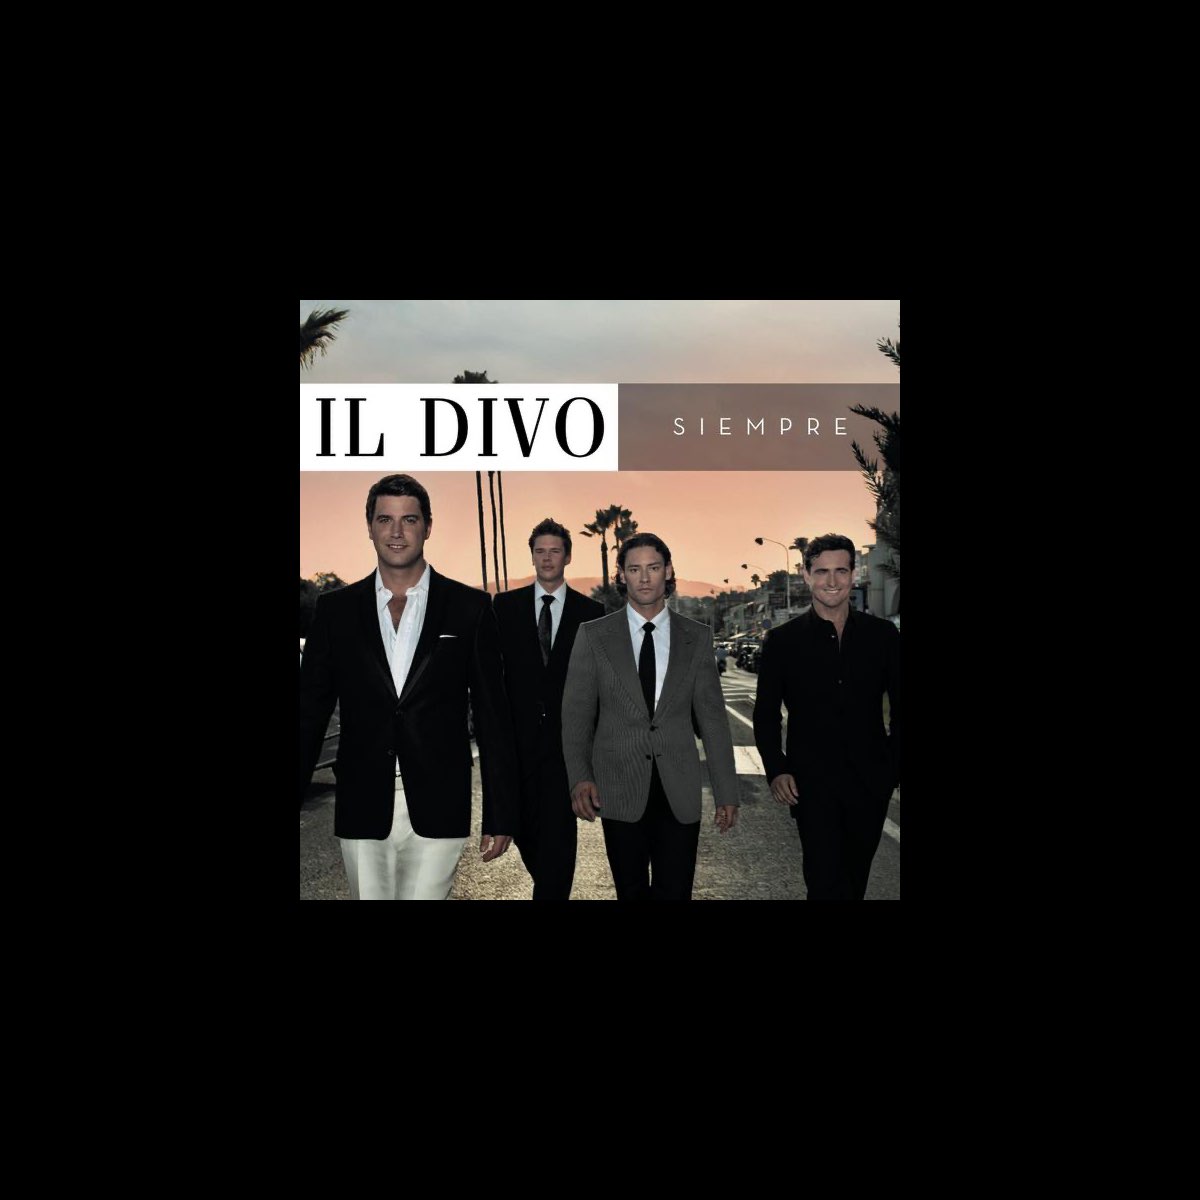 Siempre - Album by Il Divo - Apple Music